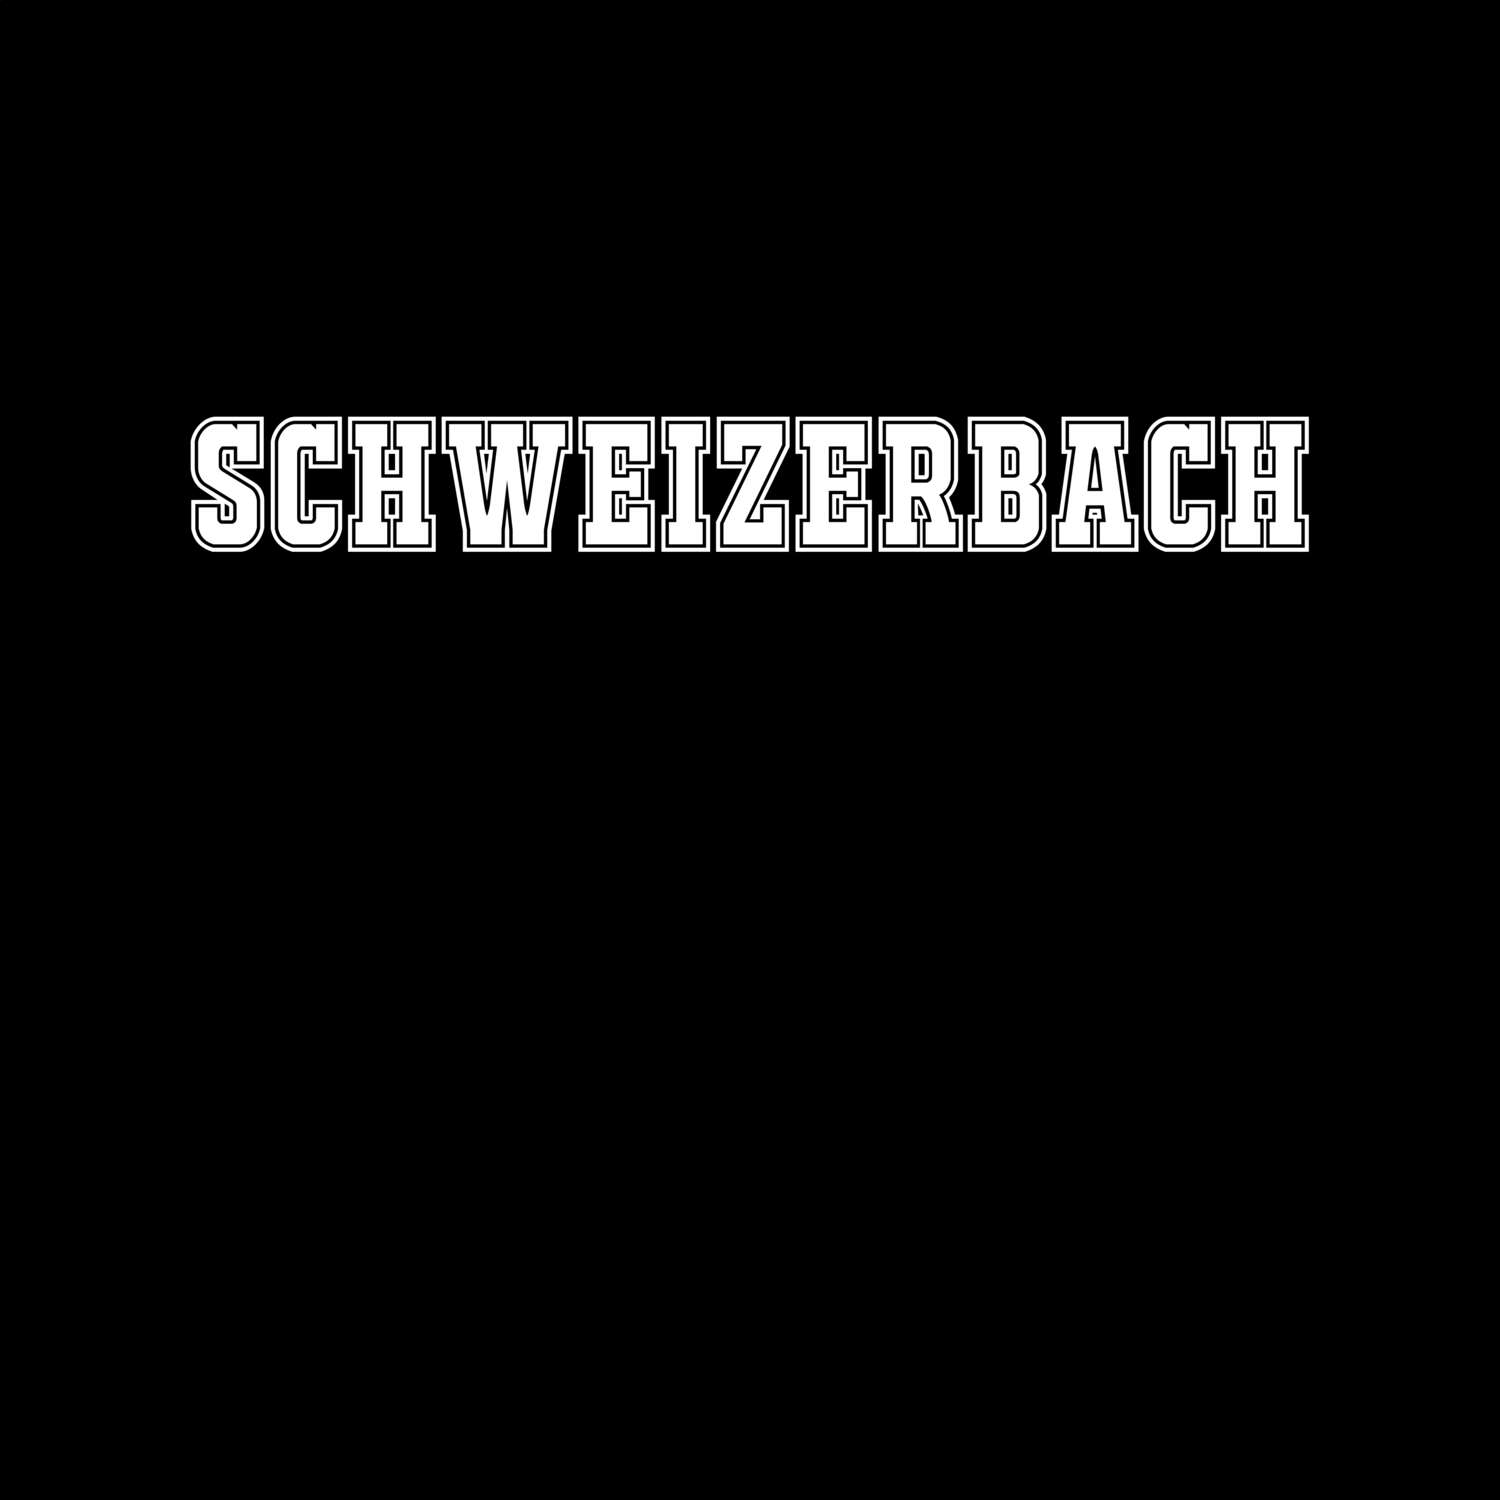 Schweizerbach T-Shirt »Classic«